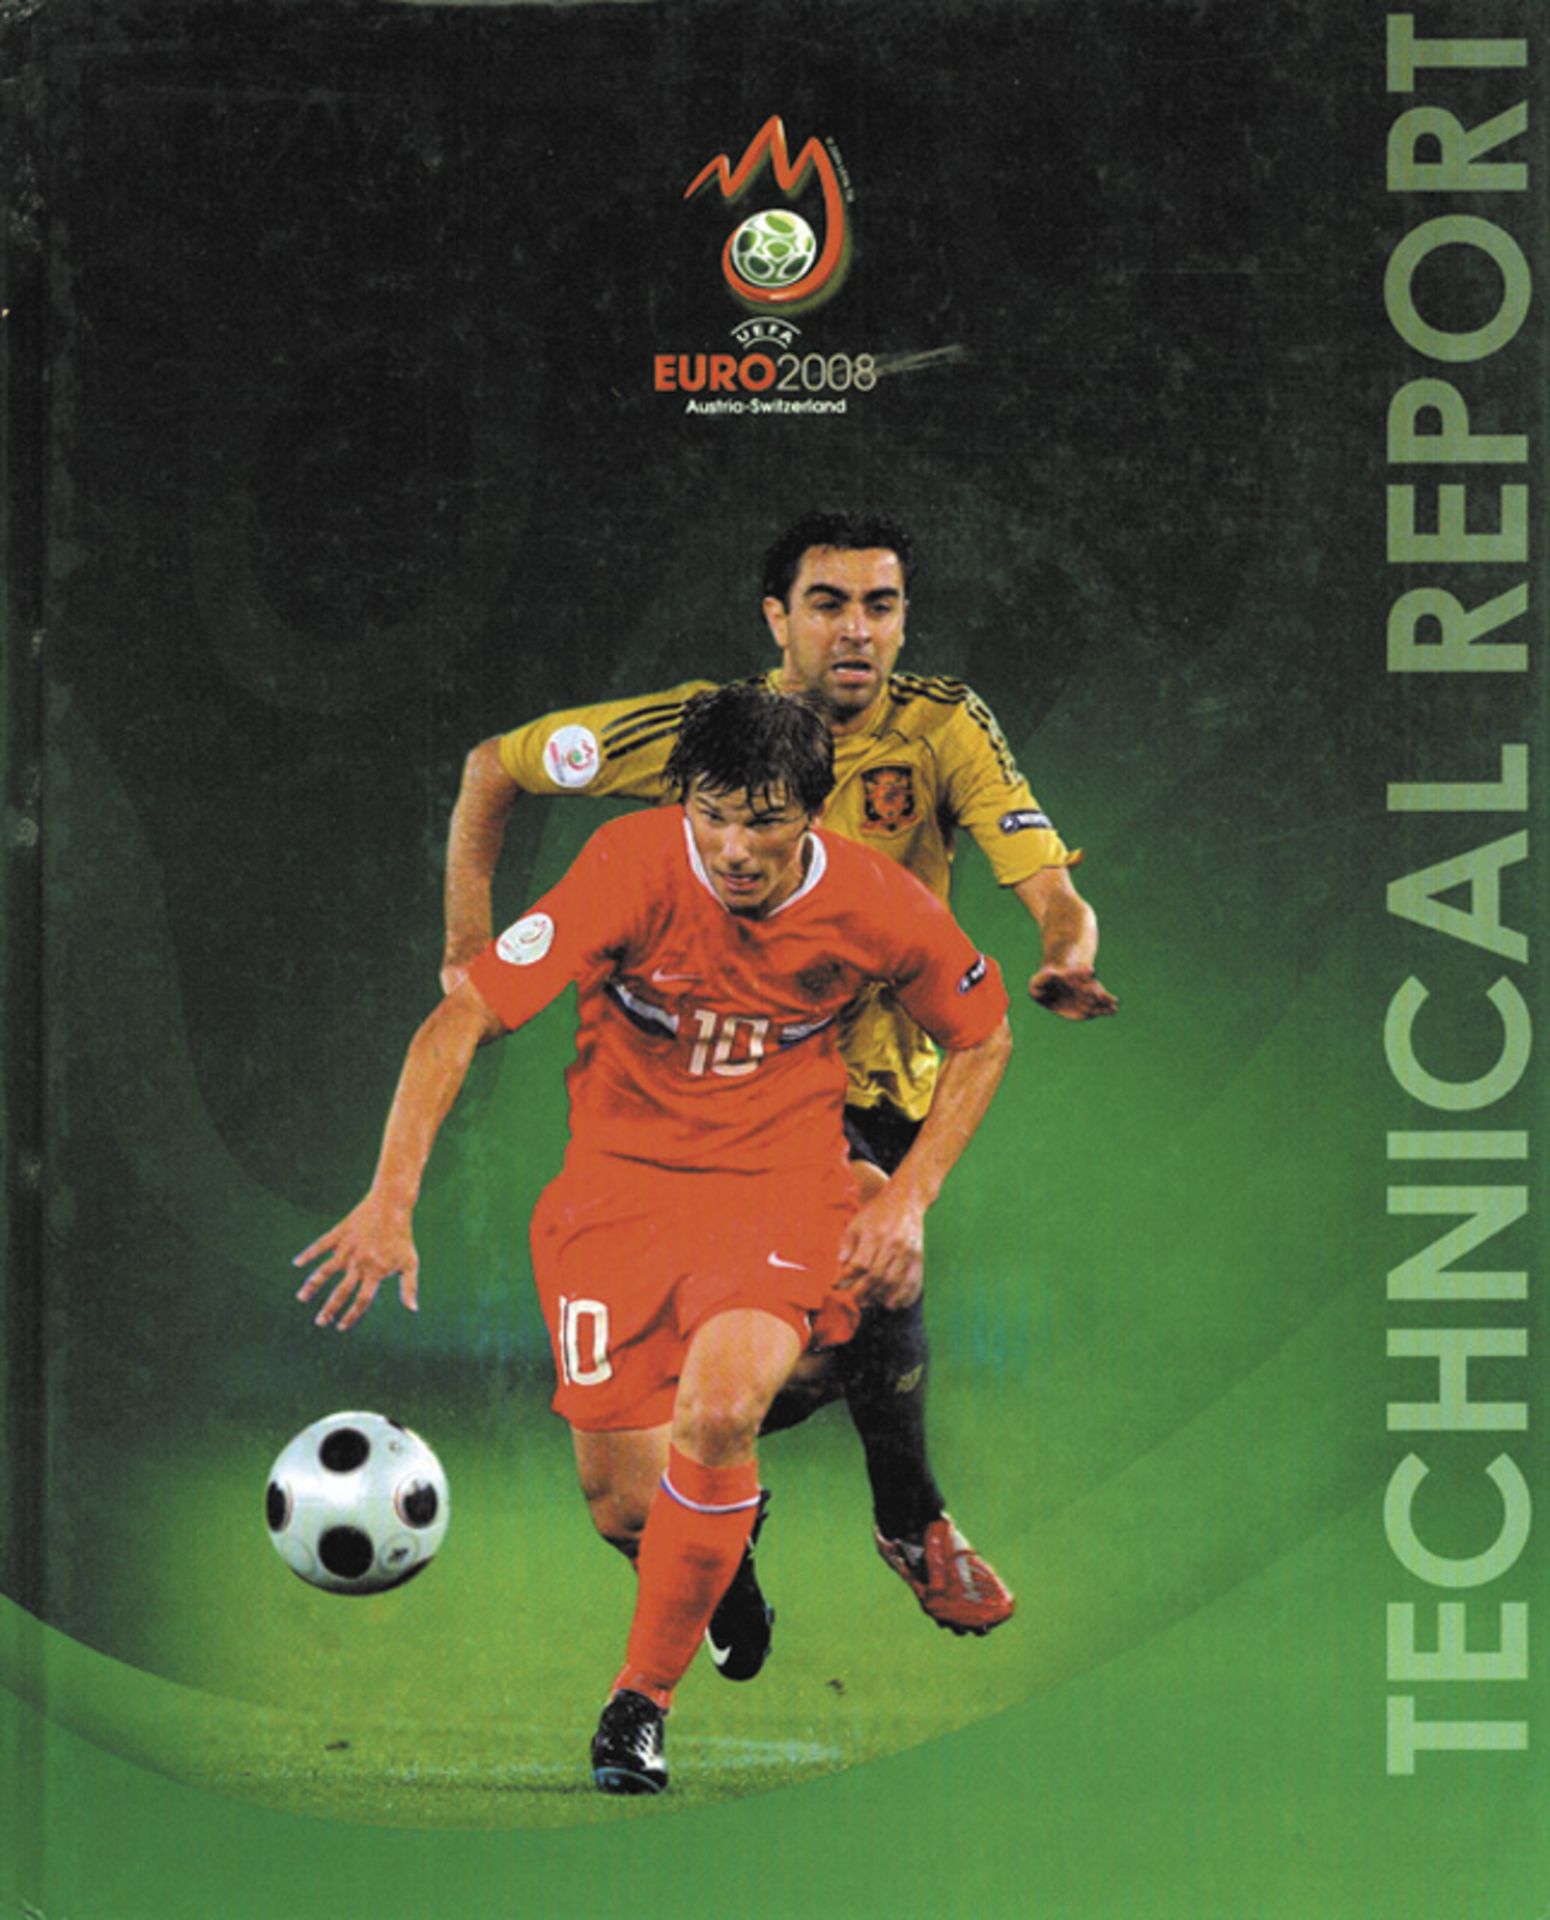 UEFA Euro 2008 Austria/Switzerland Tech. Report - Technical Report. Size 23x28cm, 164pages, about 30